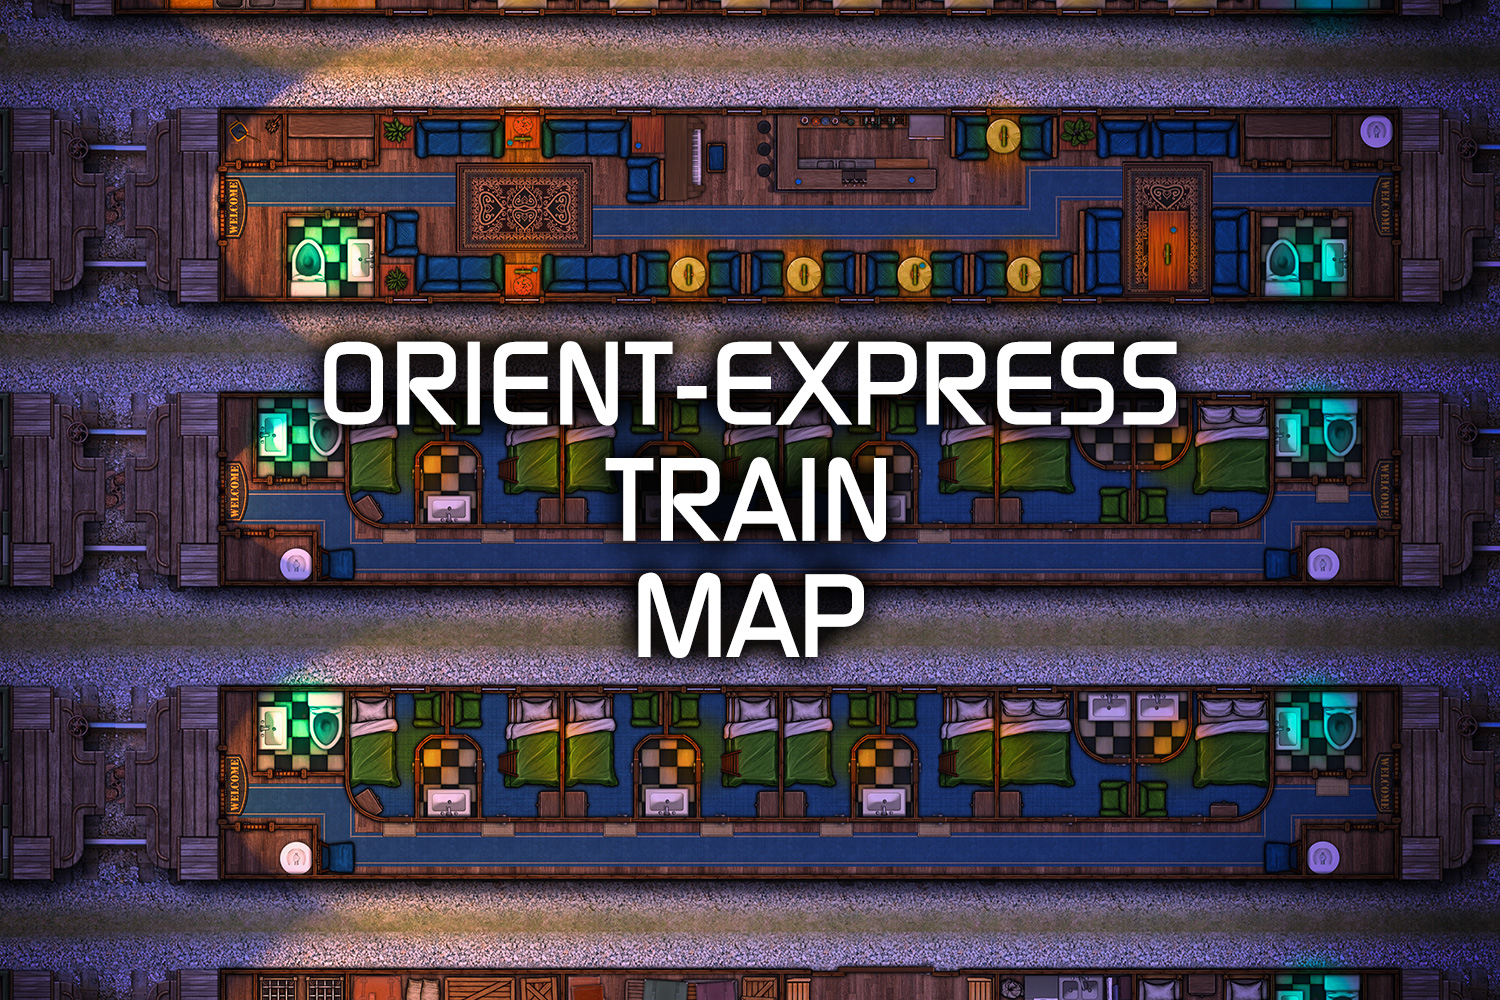 ORIENT-EXPRESS TRAIN